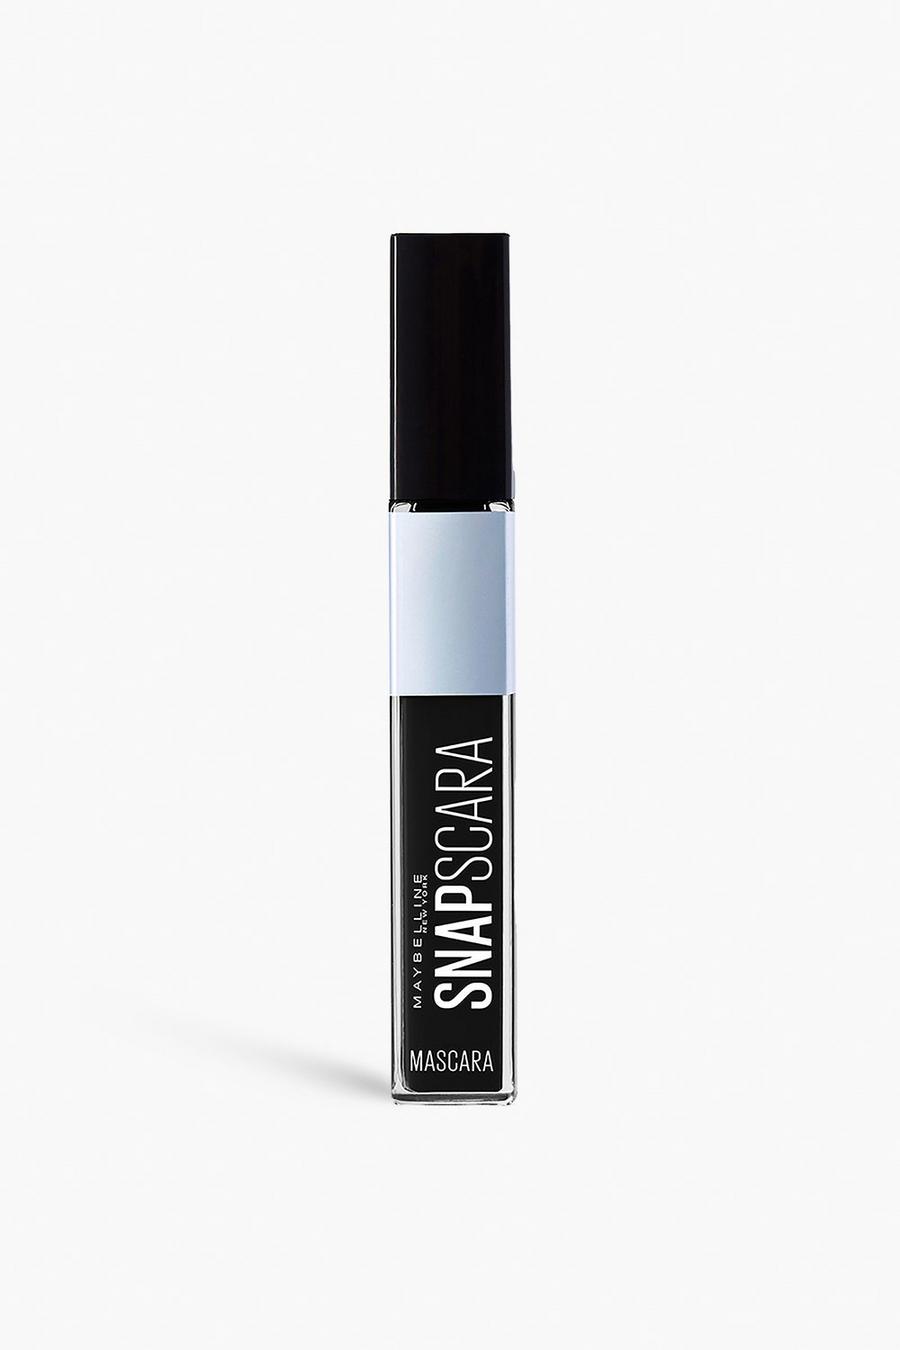 Black Maybelline Snapscara Lengthening Natural Looking Eyelashes Easy To Remove, Flake Free Mascara